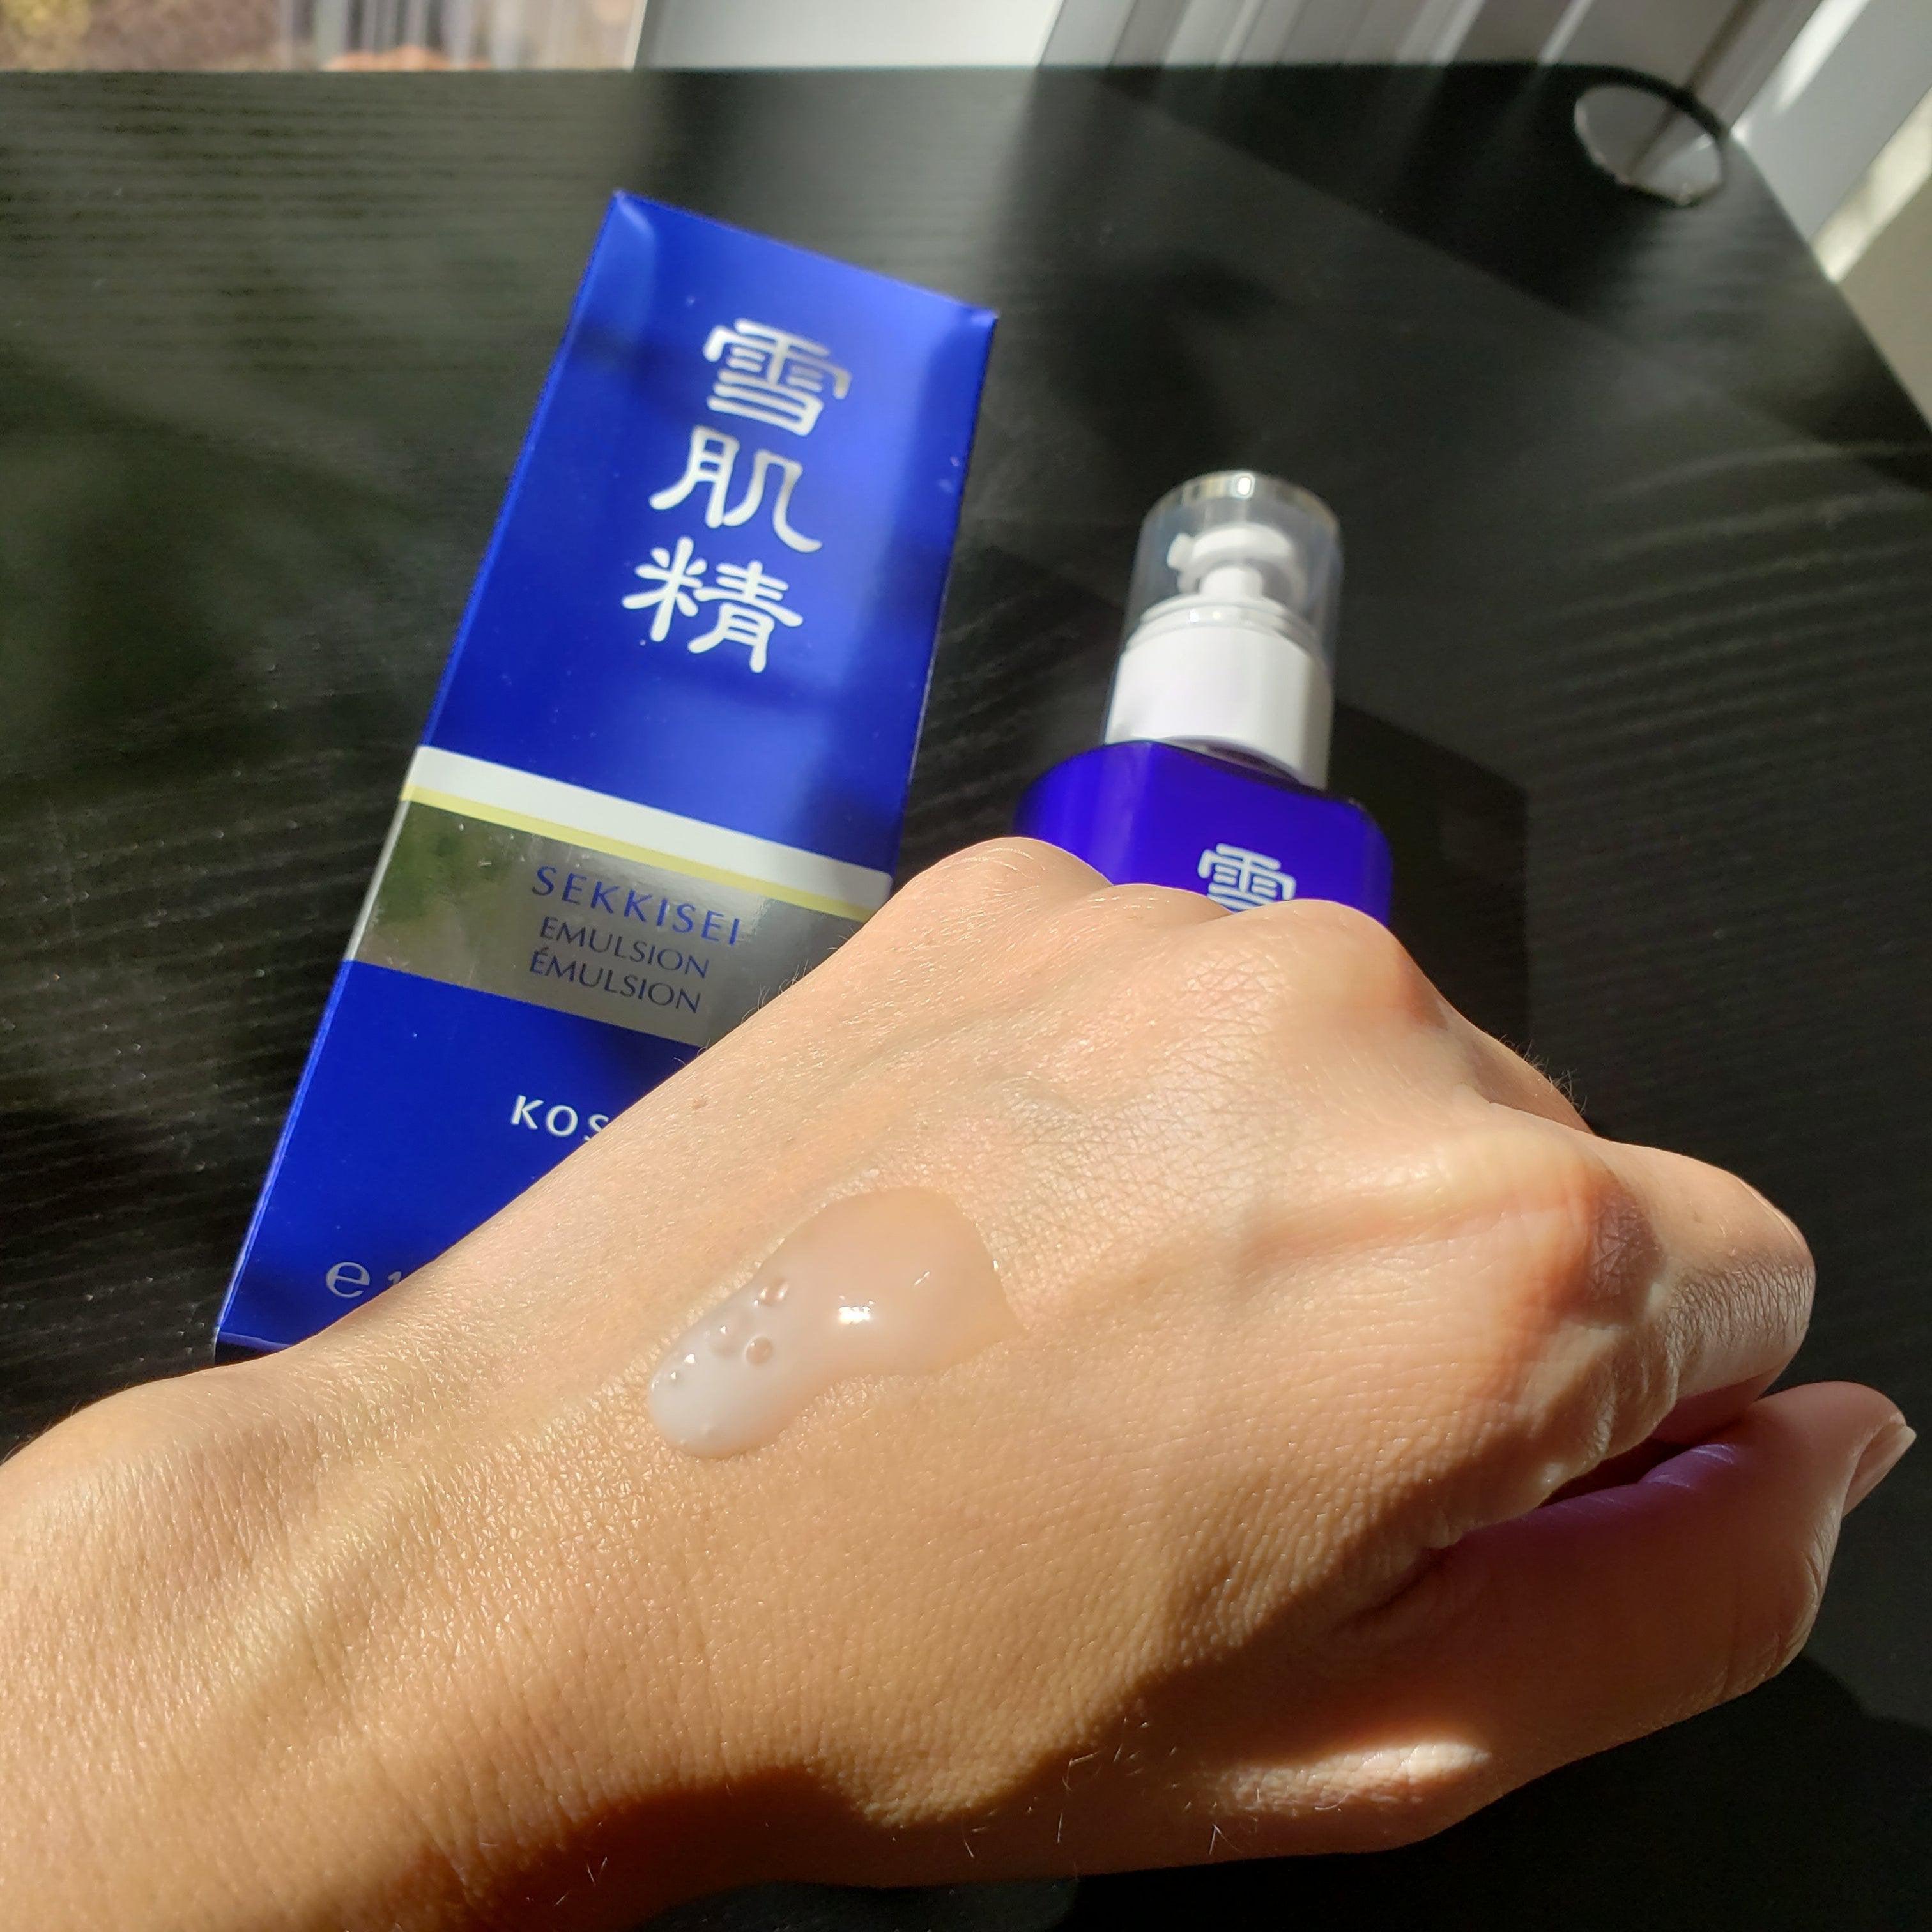 Kose Sekkisei Emulsion Excellent Skin Brightening Moisture Milk 140ml